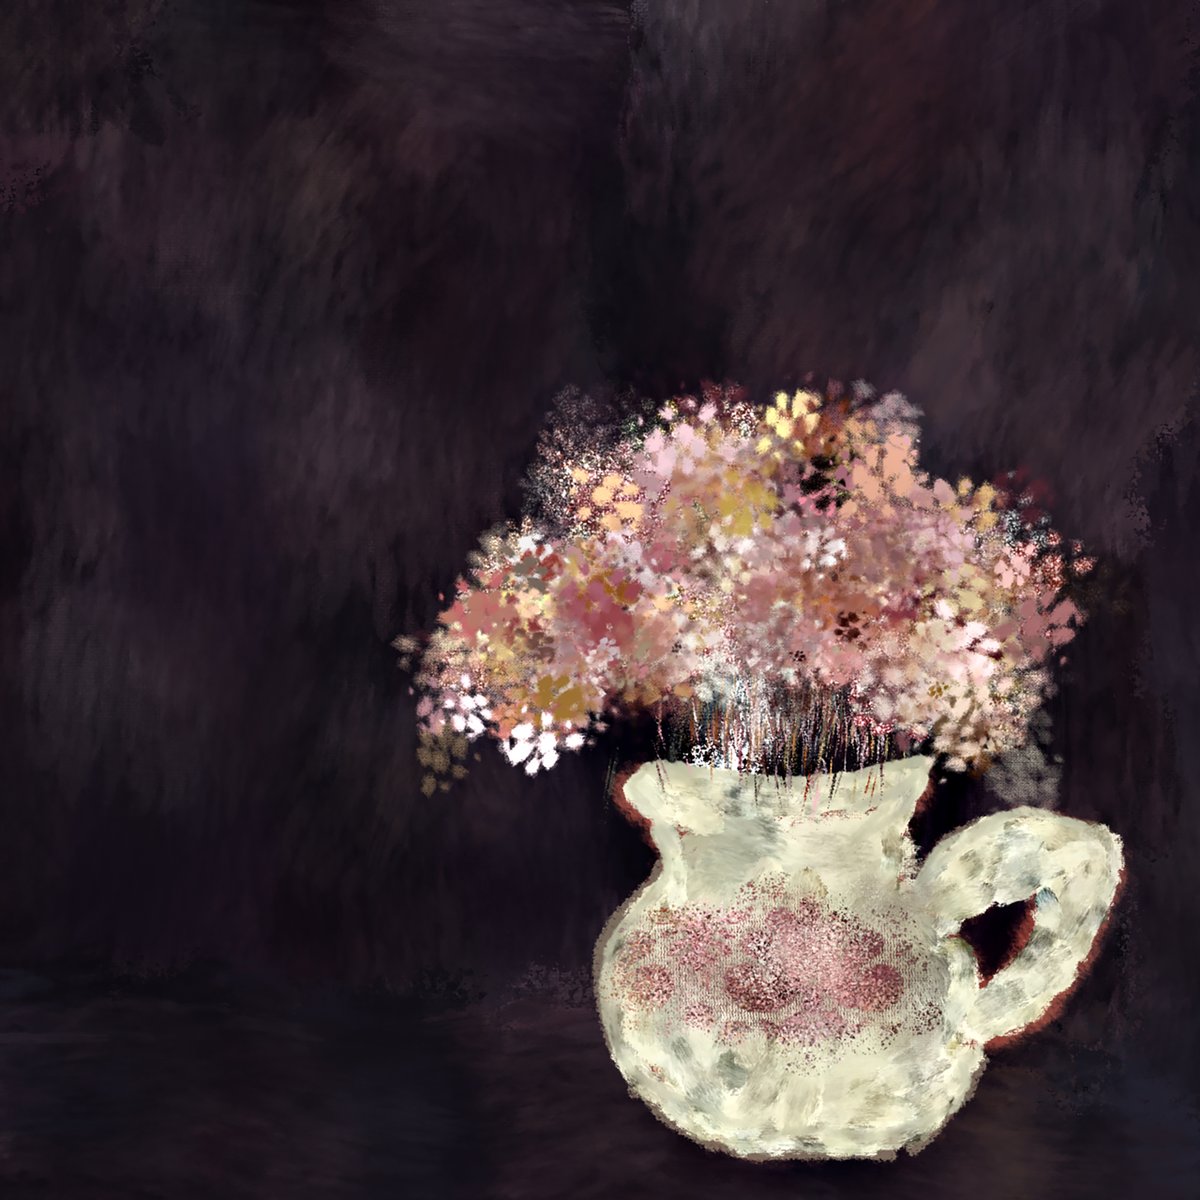 Primitive jug with flower illustration.
#abstractart #background #GreetingCards #patterns #wallpaper #textiles #prints #PrintsForSale #art #digitalart #digitalpainting #primitiveart #art